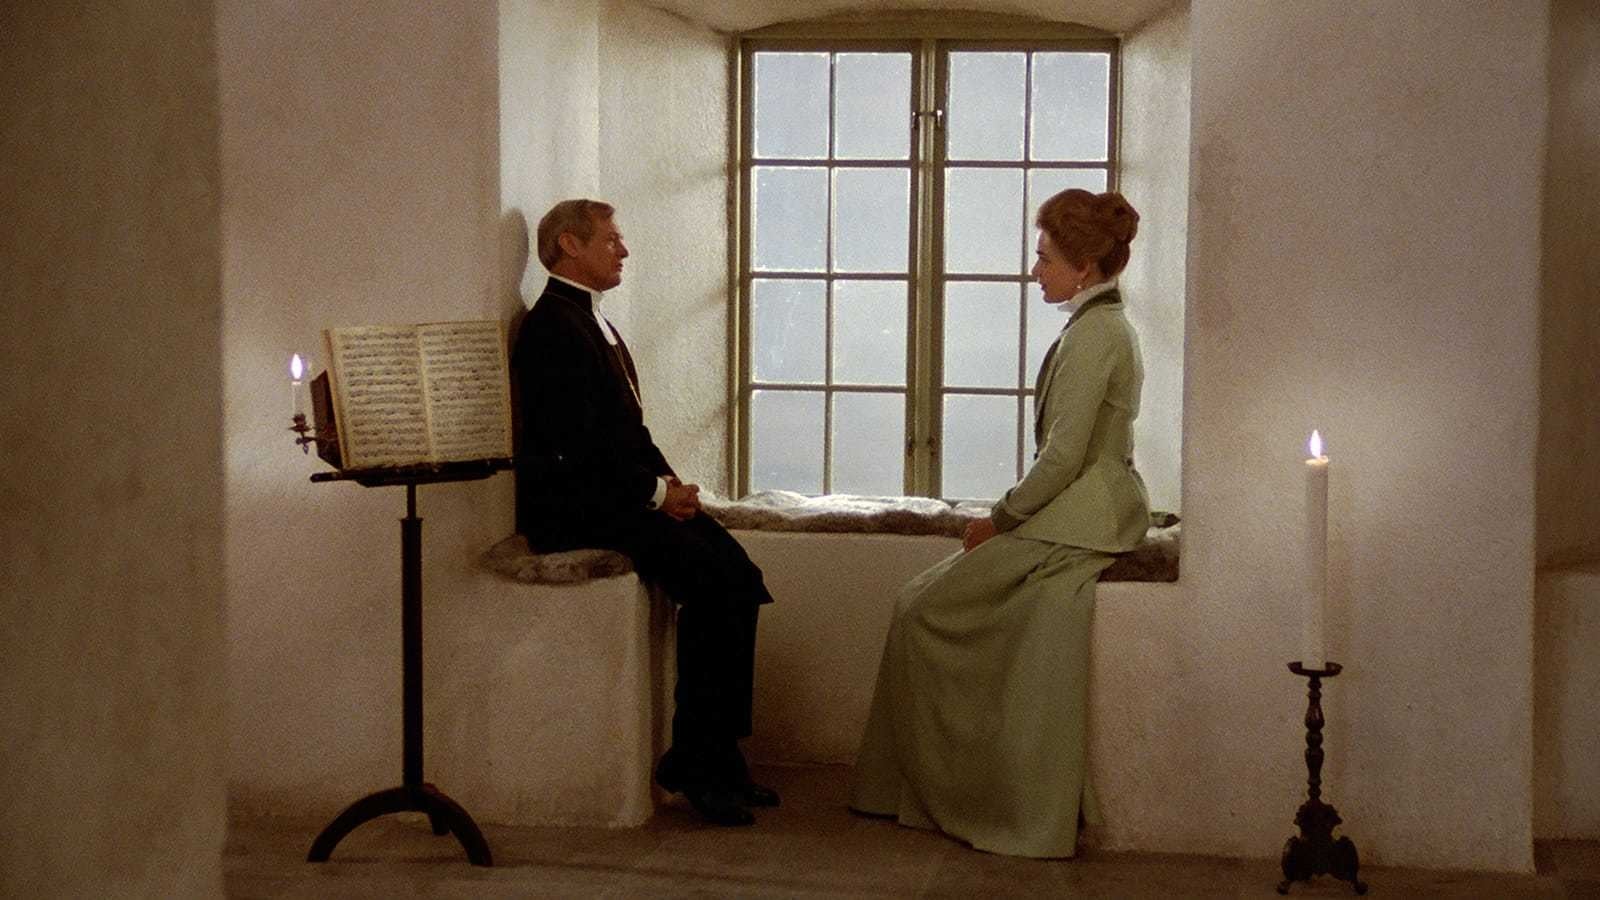 devotudoaocinema.com.br - O maravilhoso "Fanny e Alexander", de Ingmar Bergman